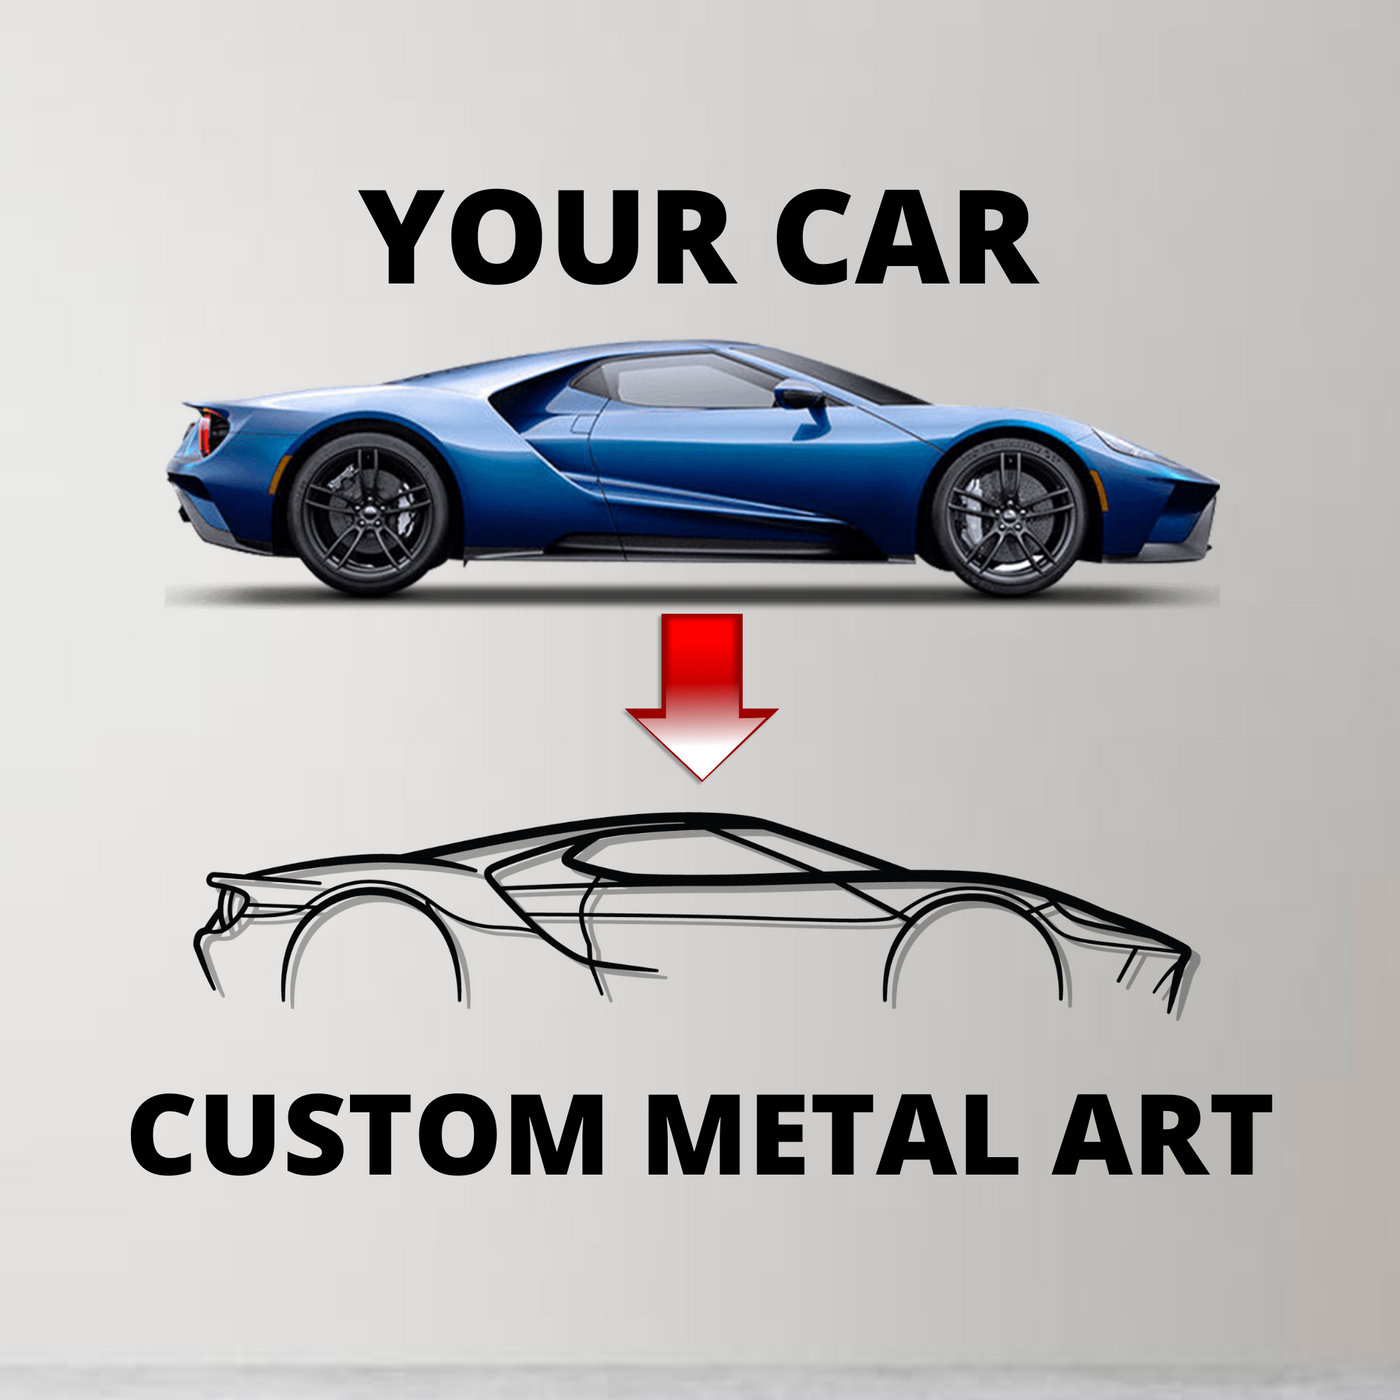 Corvette c5 Classic Silhouette Metal Wall Art